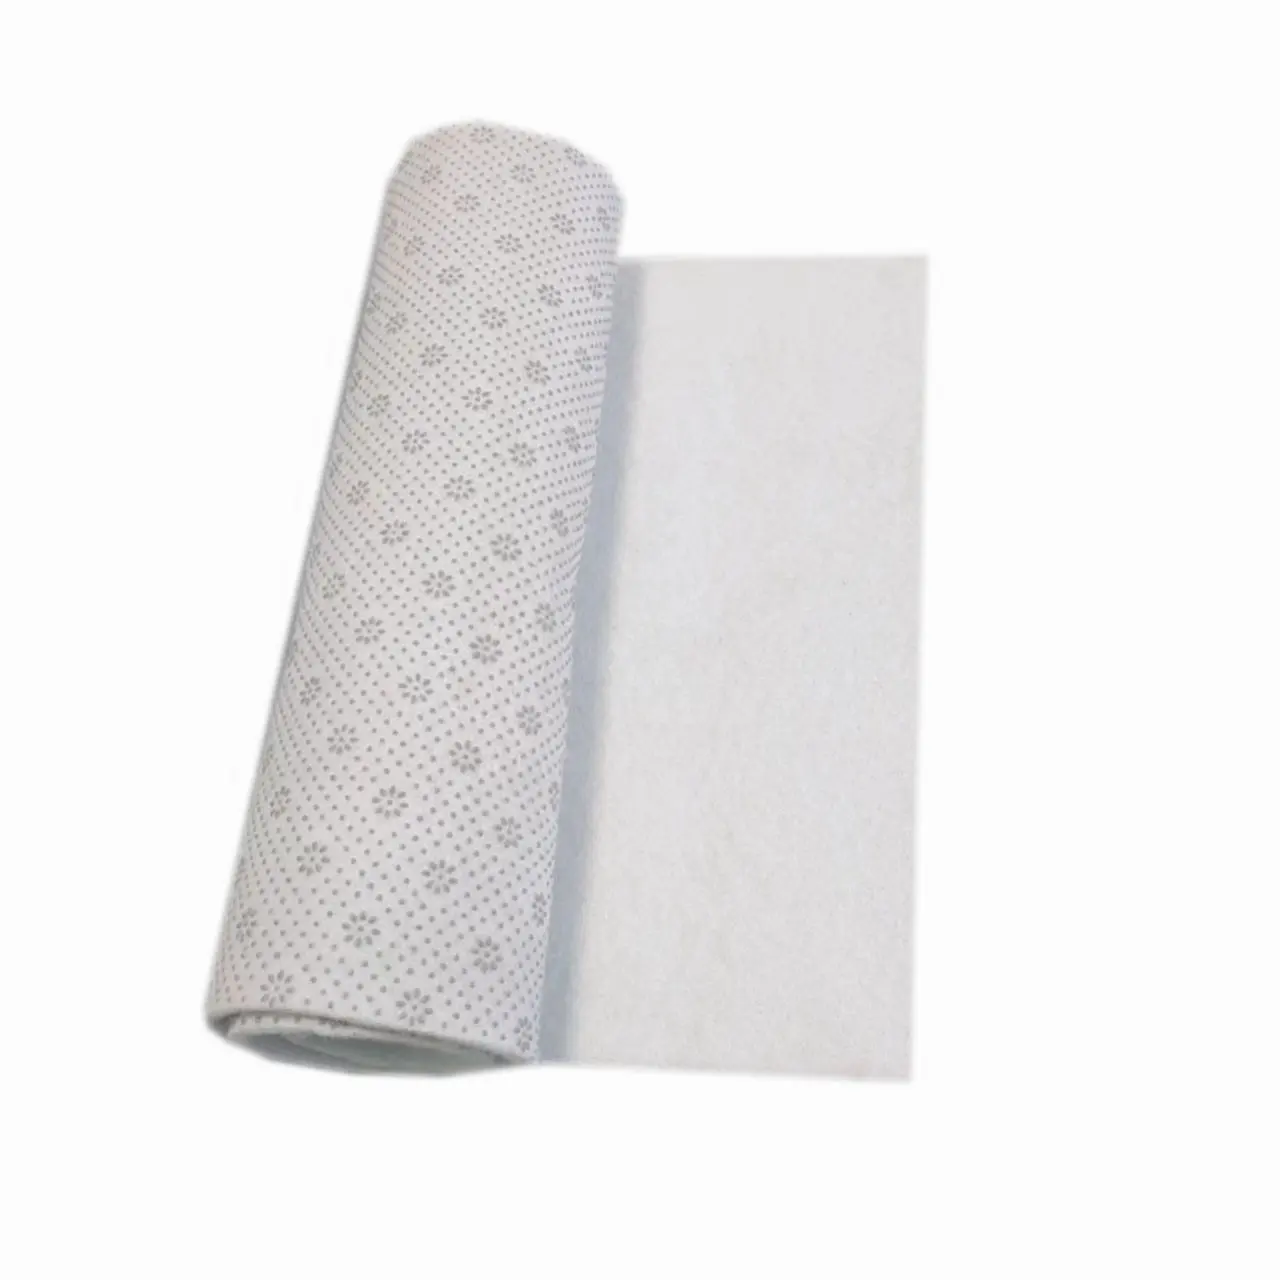 Tela de fieltro de puntos tela compuesta gota alfombra de plástico sofá ventana cojín tela de fibra química